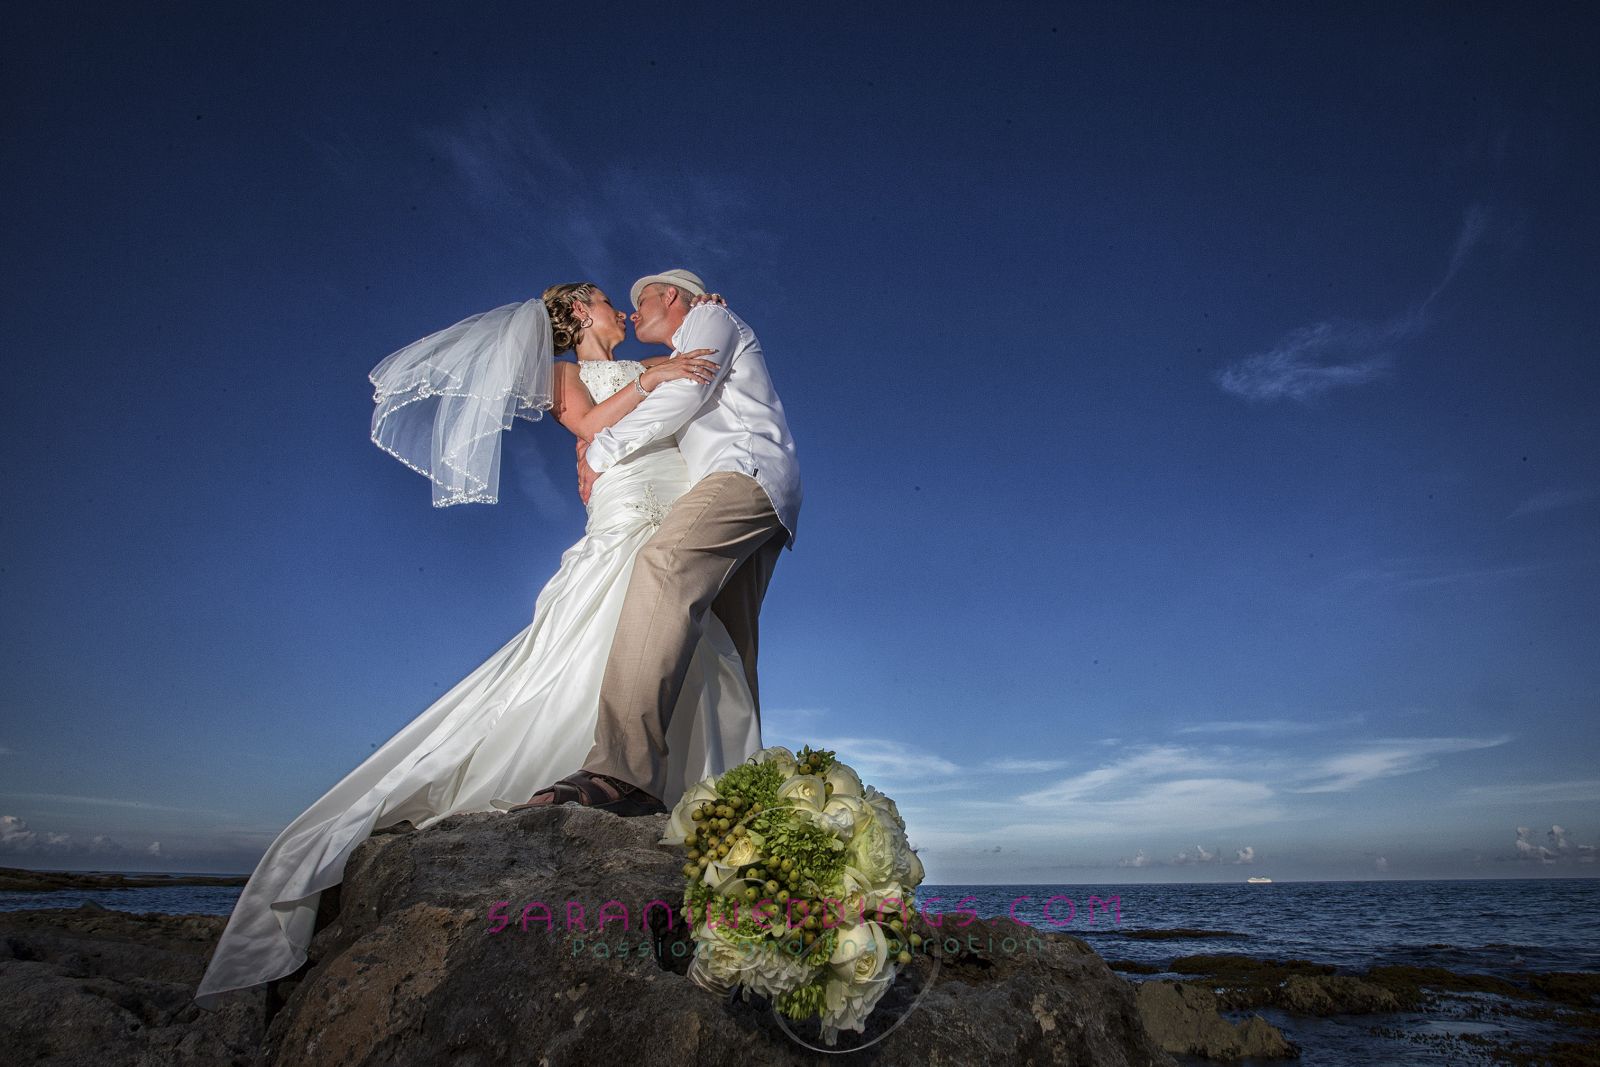 Beach destination wedding at Mayan Riviera, Mexico
Photography by Sarani E.